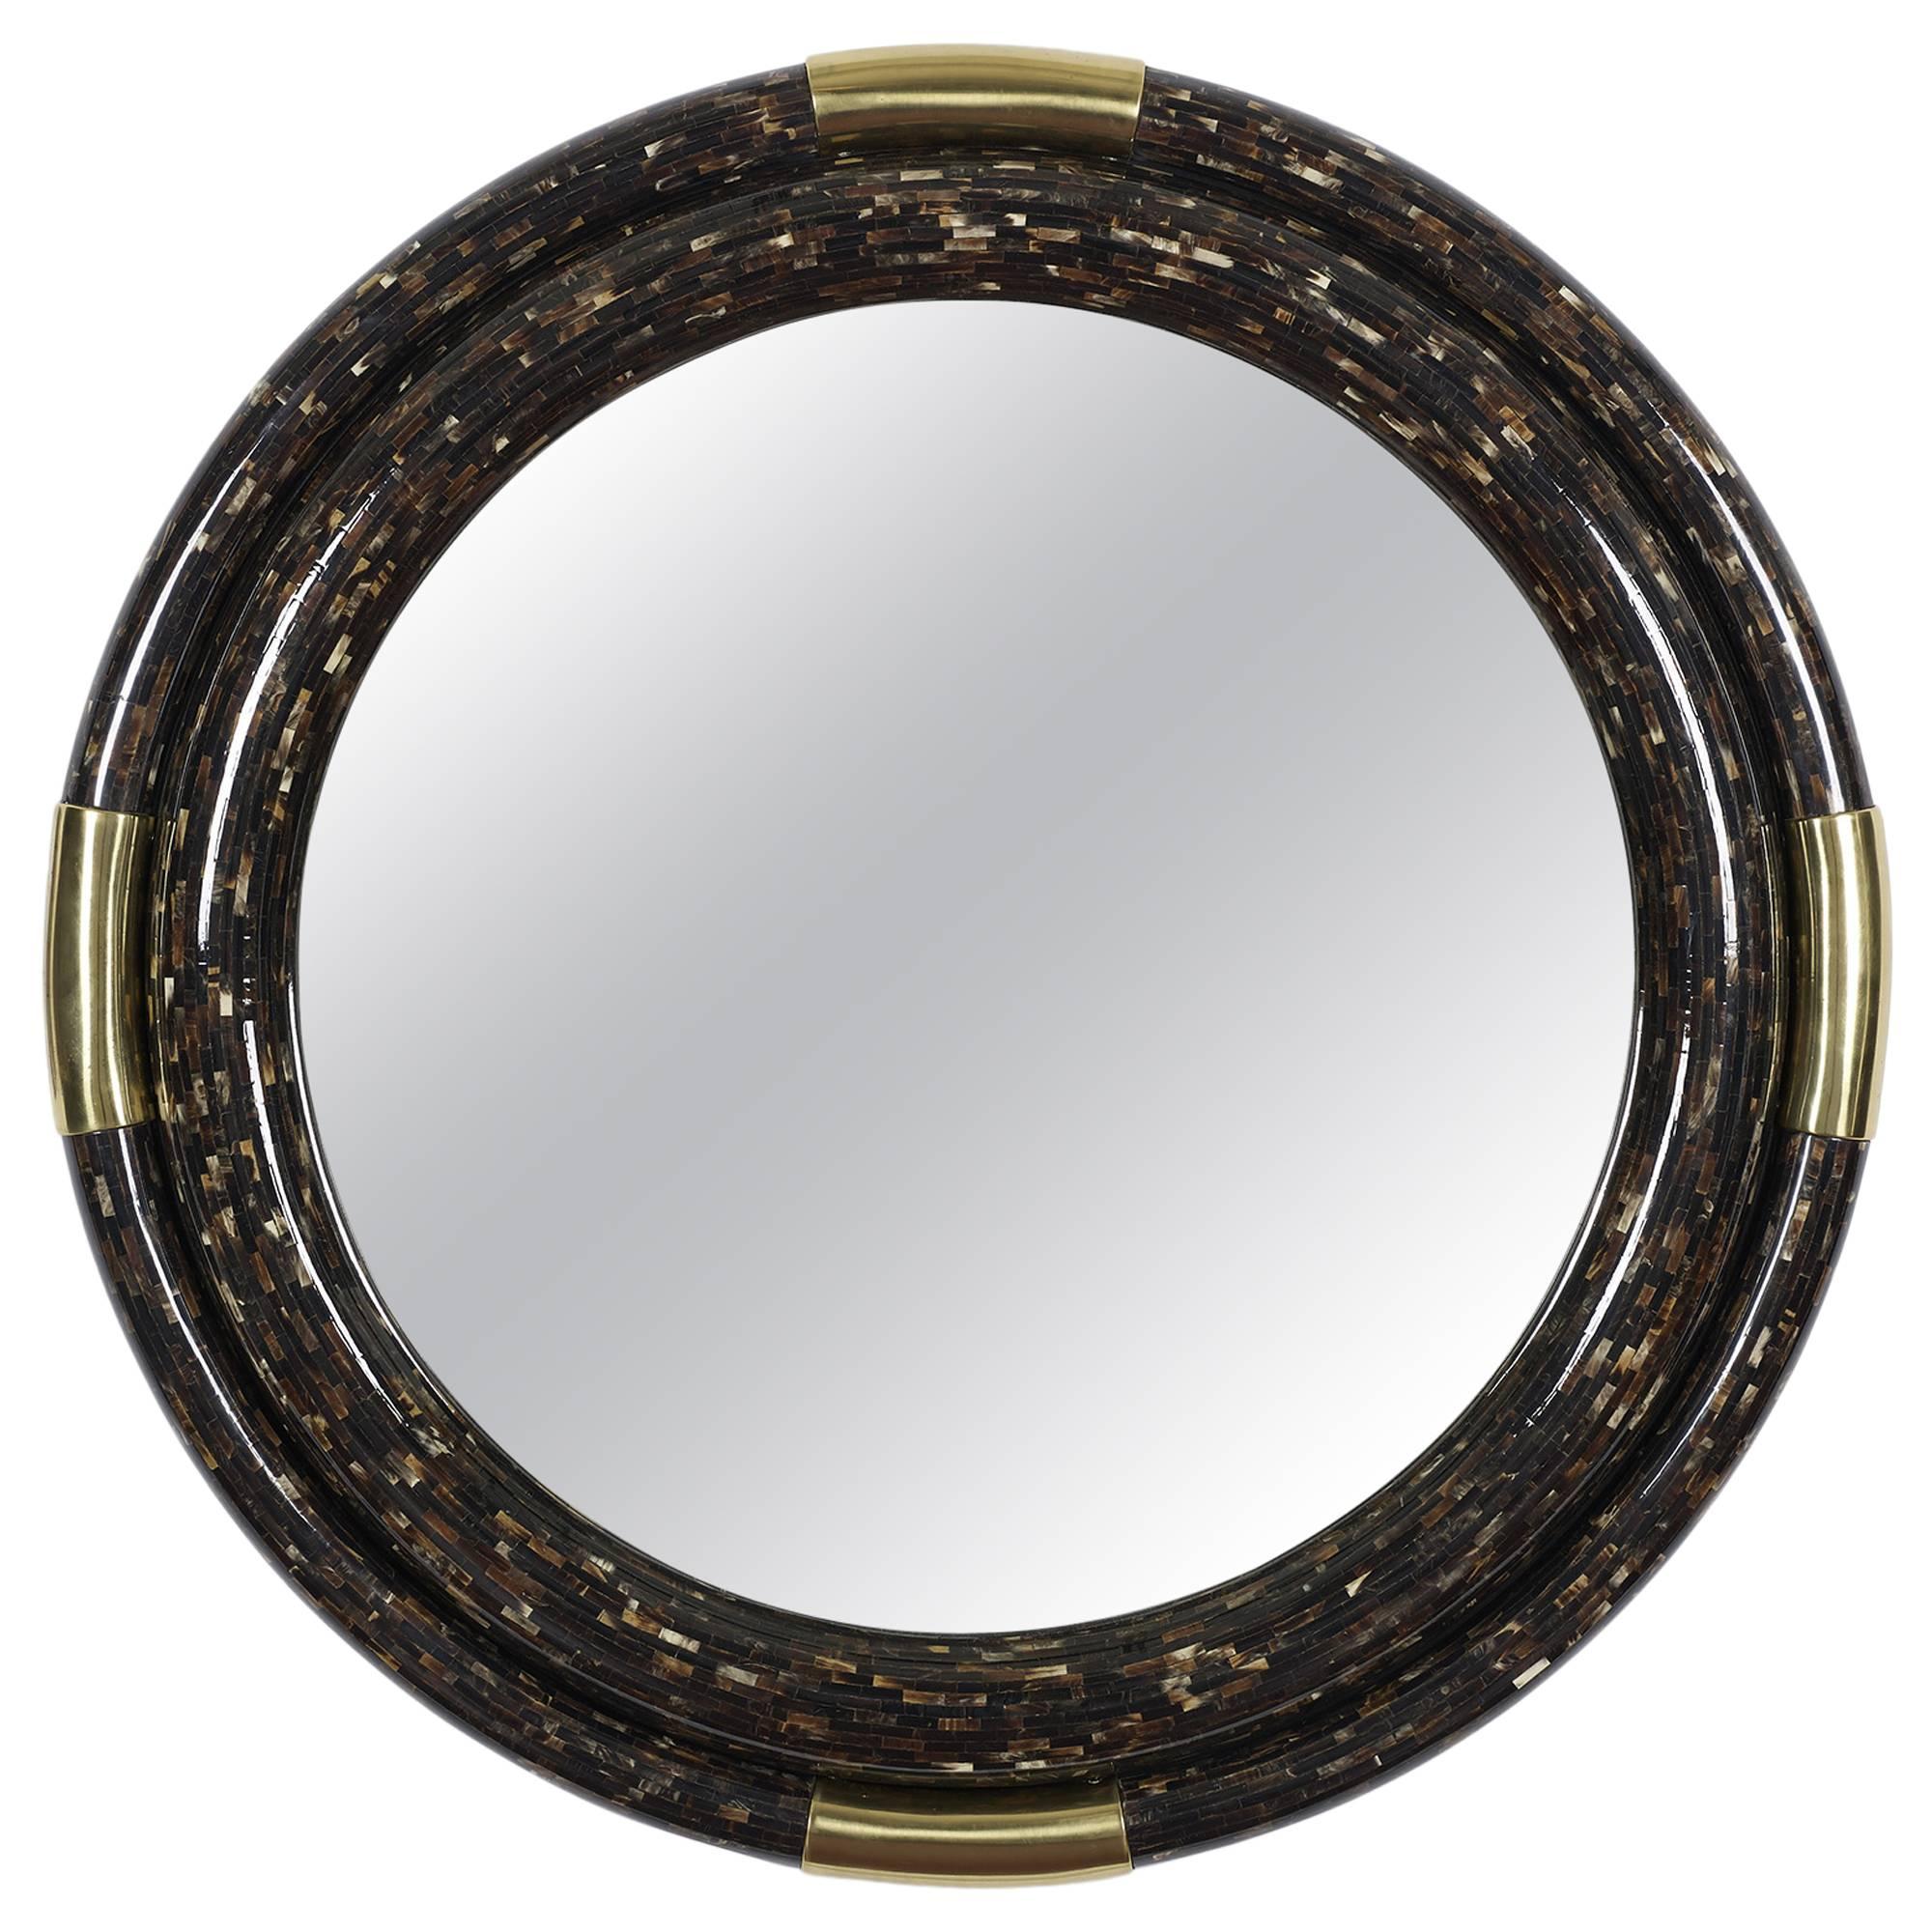 Monumental Mirror in the Manner of Karl Springer